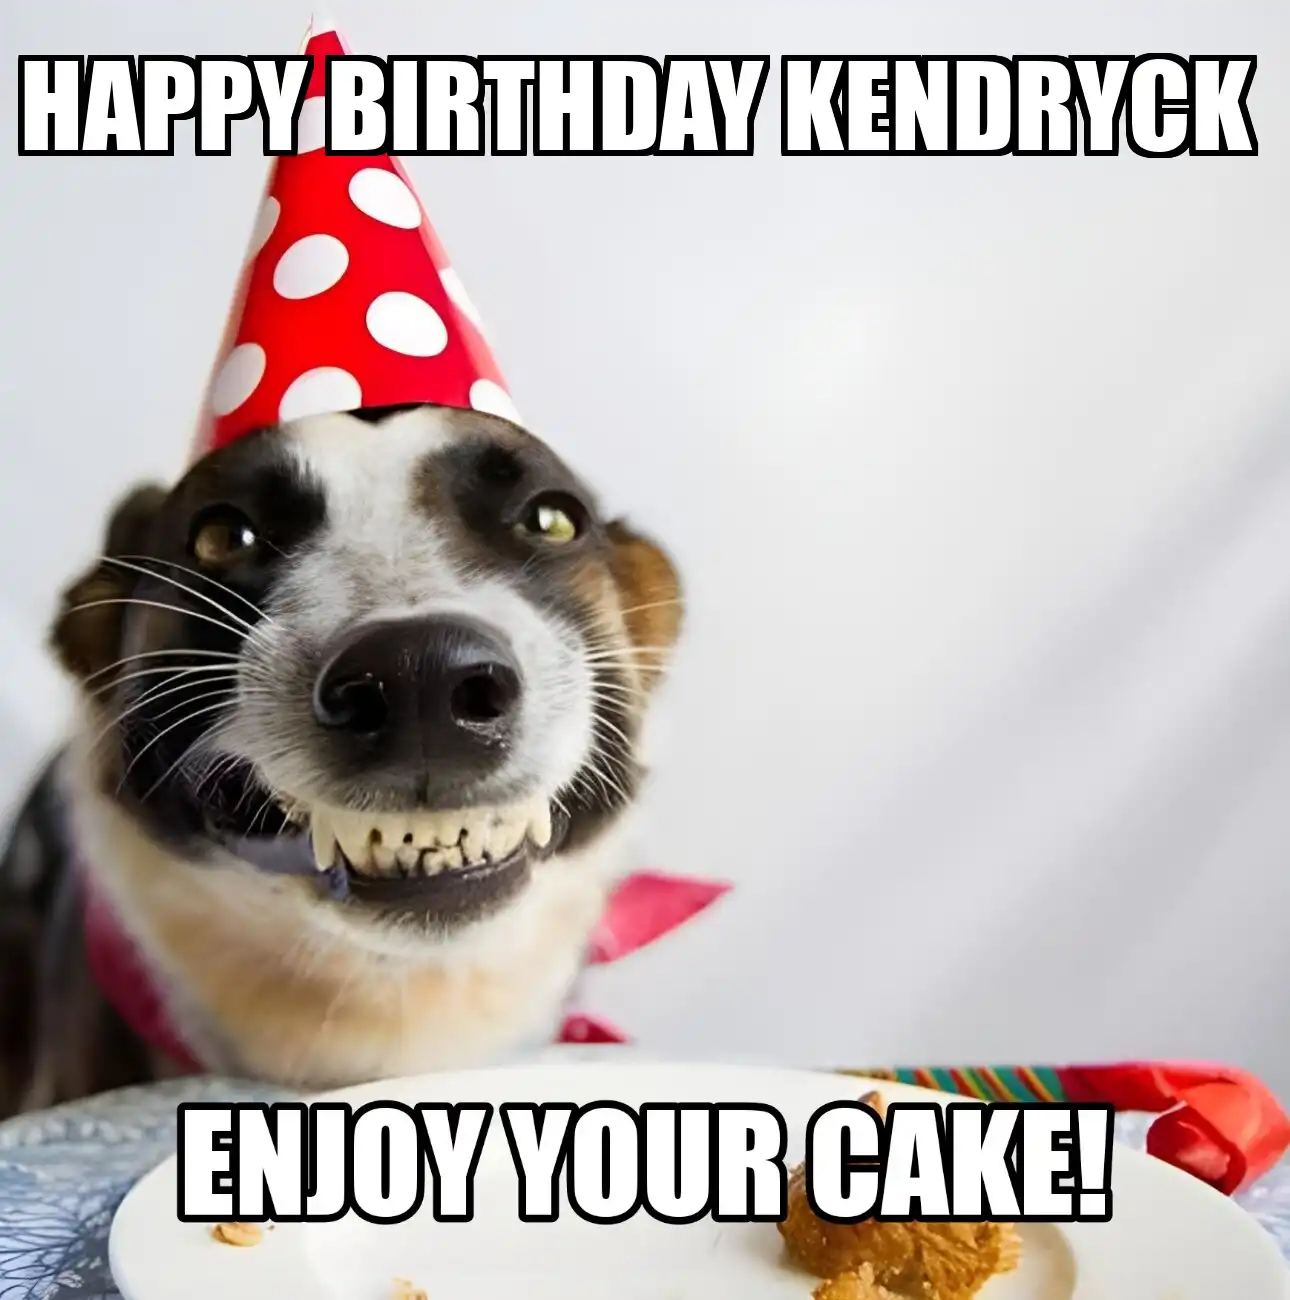 Happy Birthday Kendryck Enjoy Your Cake Dog Meme